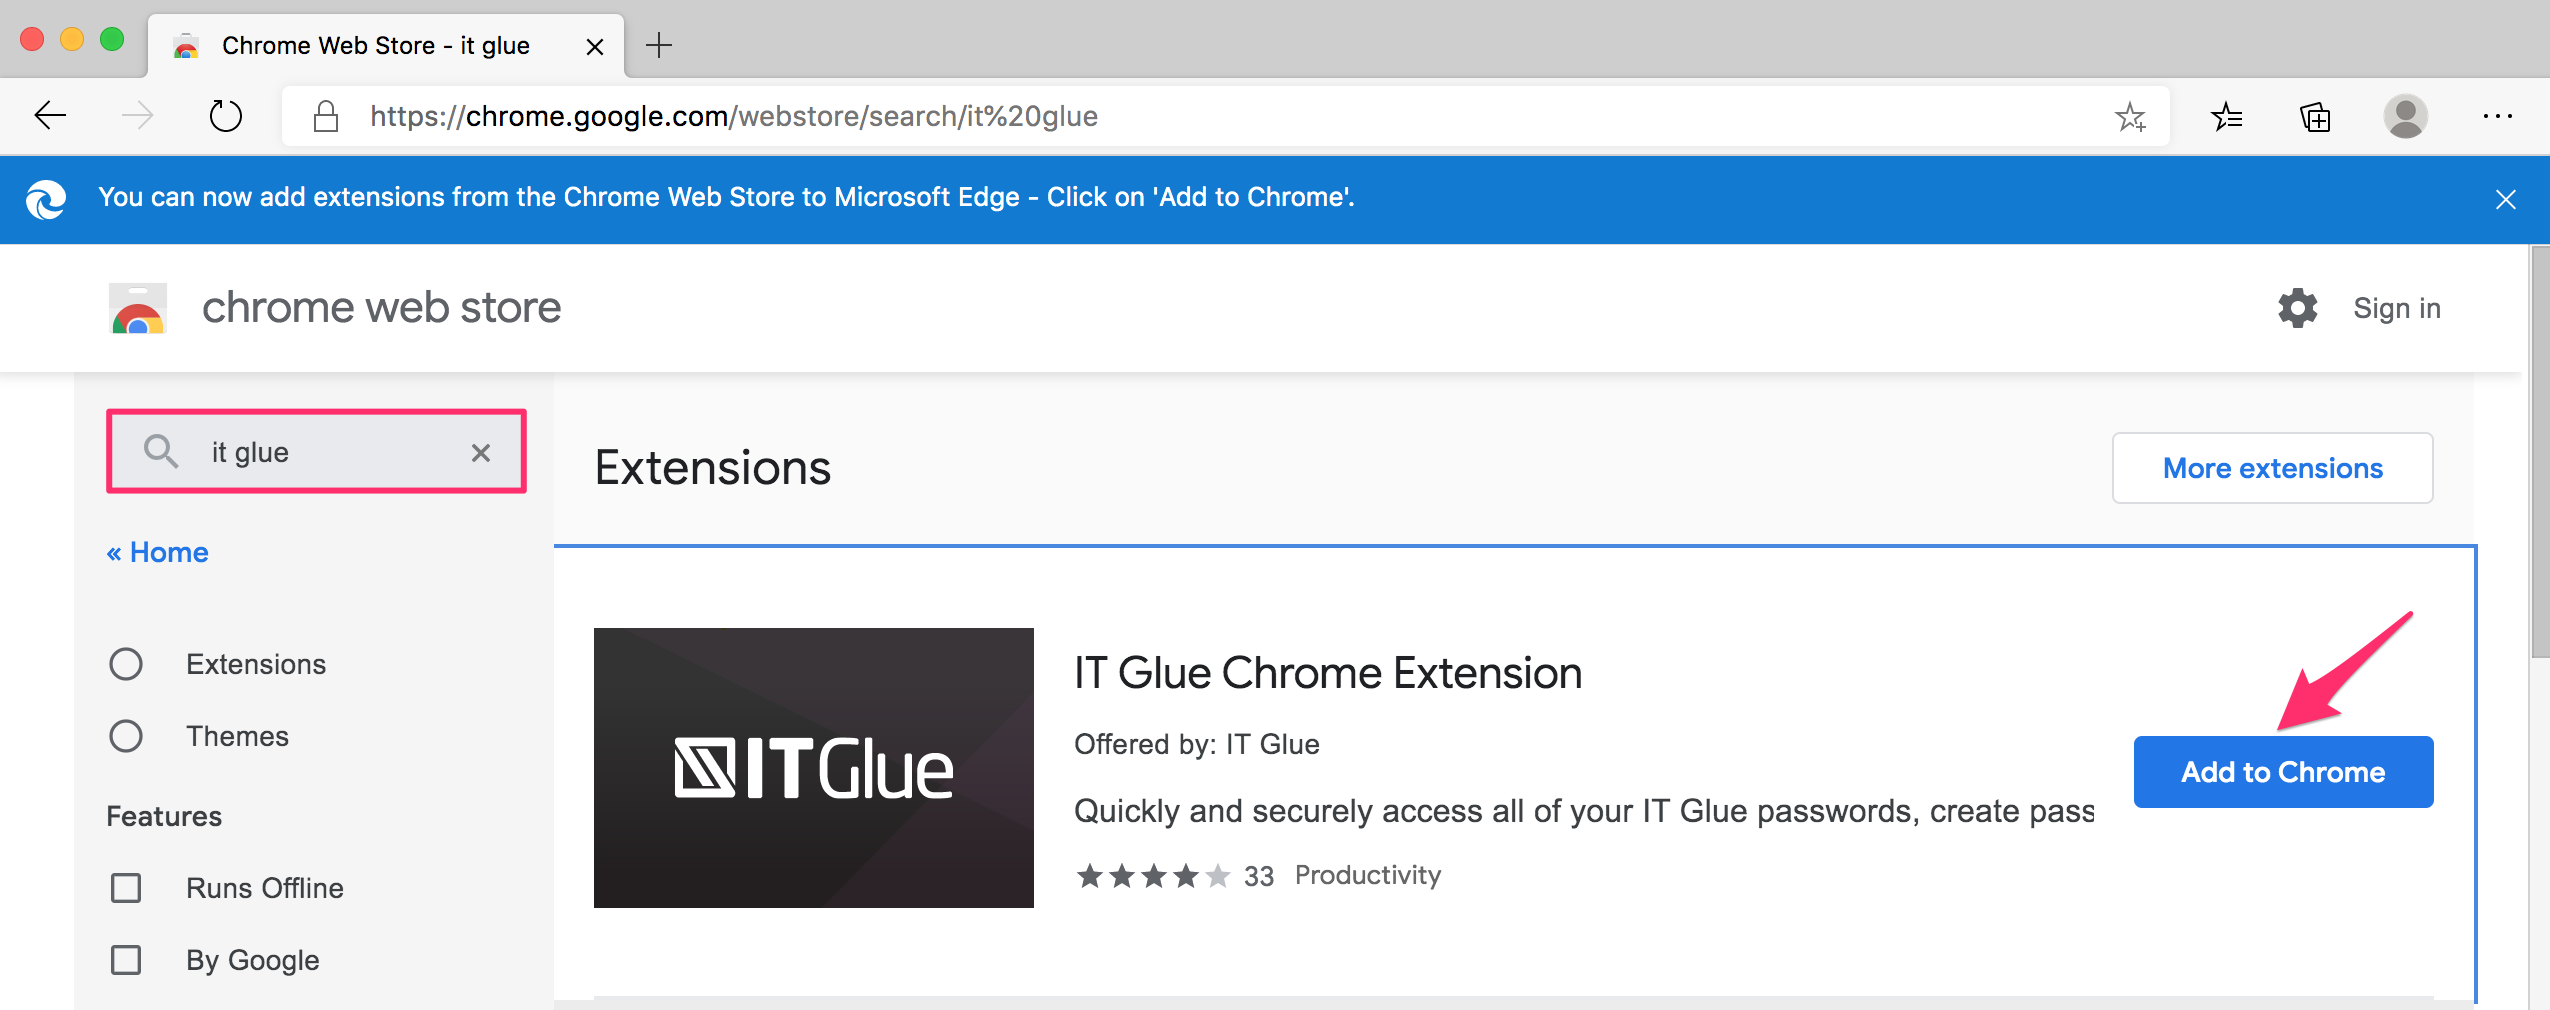 Chrome_Web_Store_-_it_glue.png